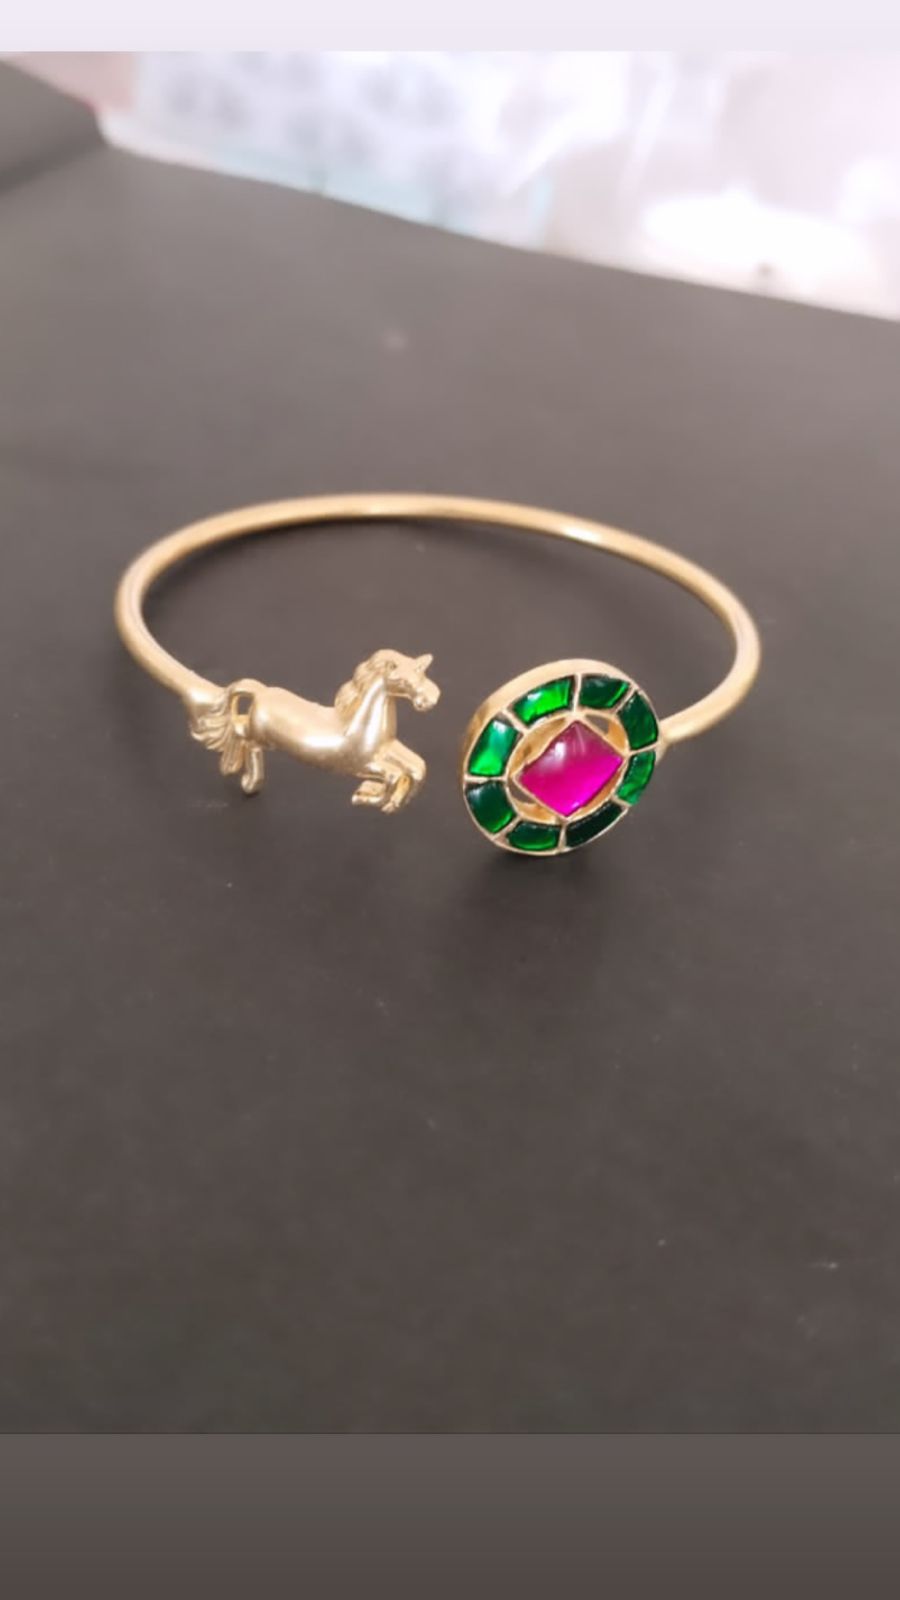 Sterling silver adjustable bracelet with pink and green Jadau stones, 24 karat micron gold plating.